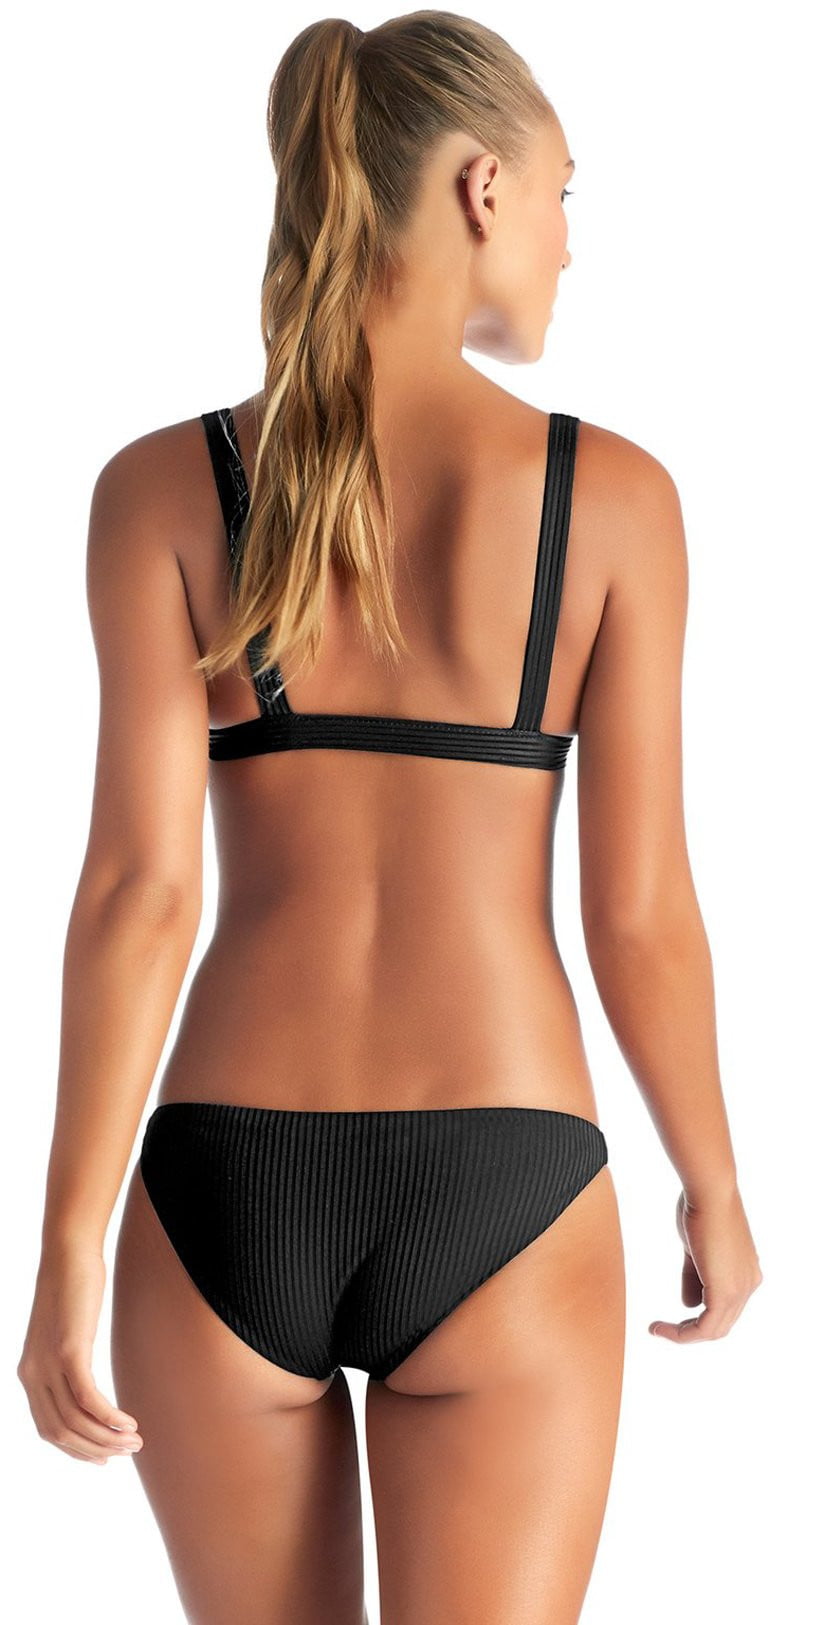 Vitamin A EcoRib Neutra Triangle Bikini Top in Black 805T ERB: